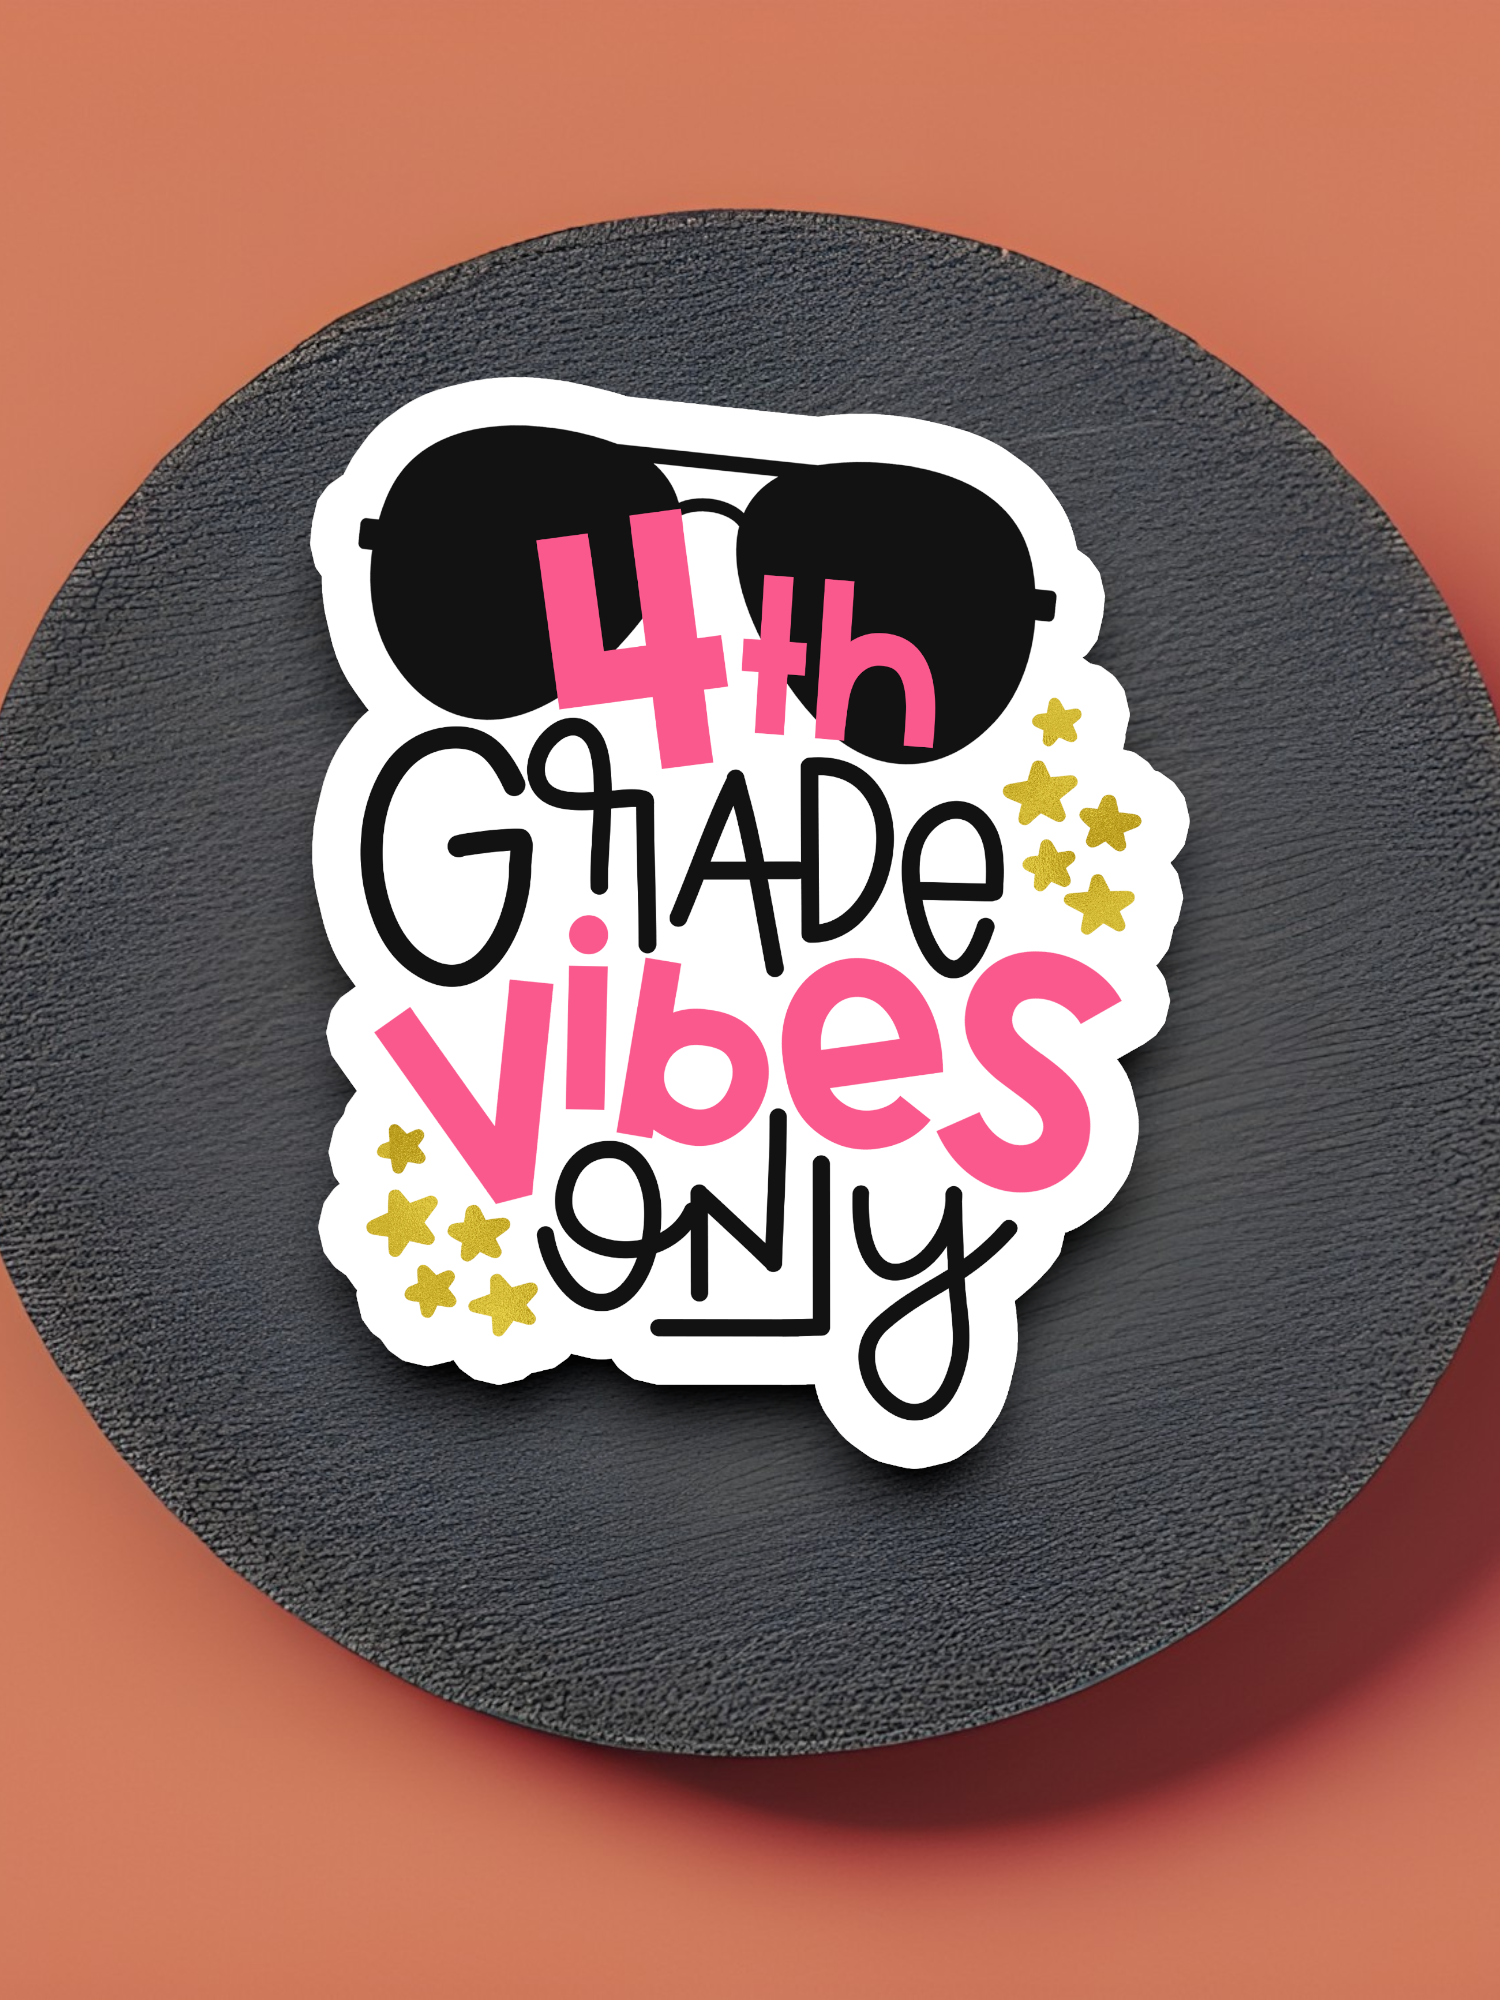 4th Grade Vibes Only - School Sticker